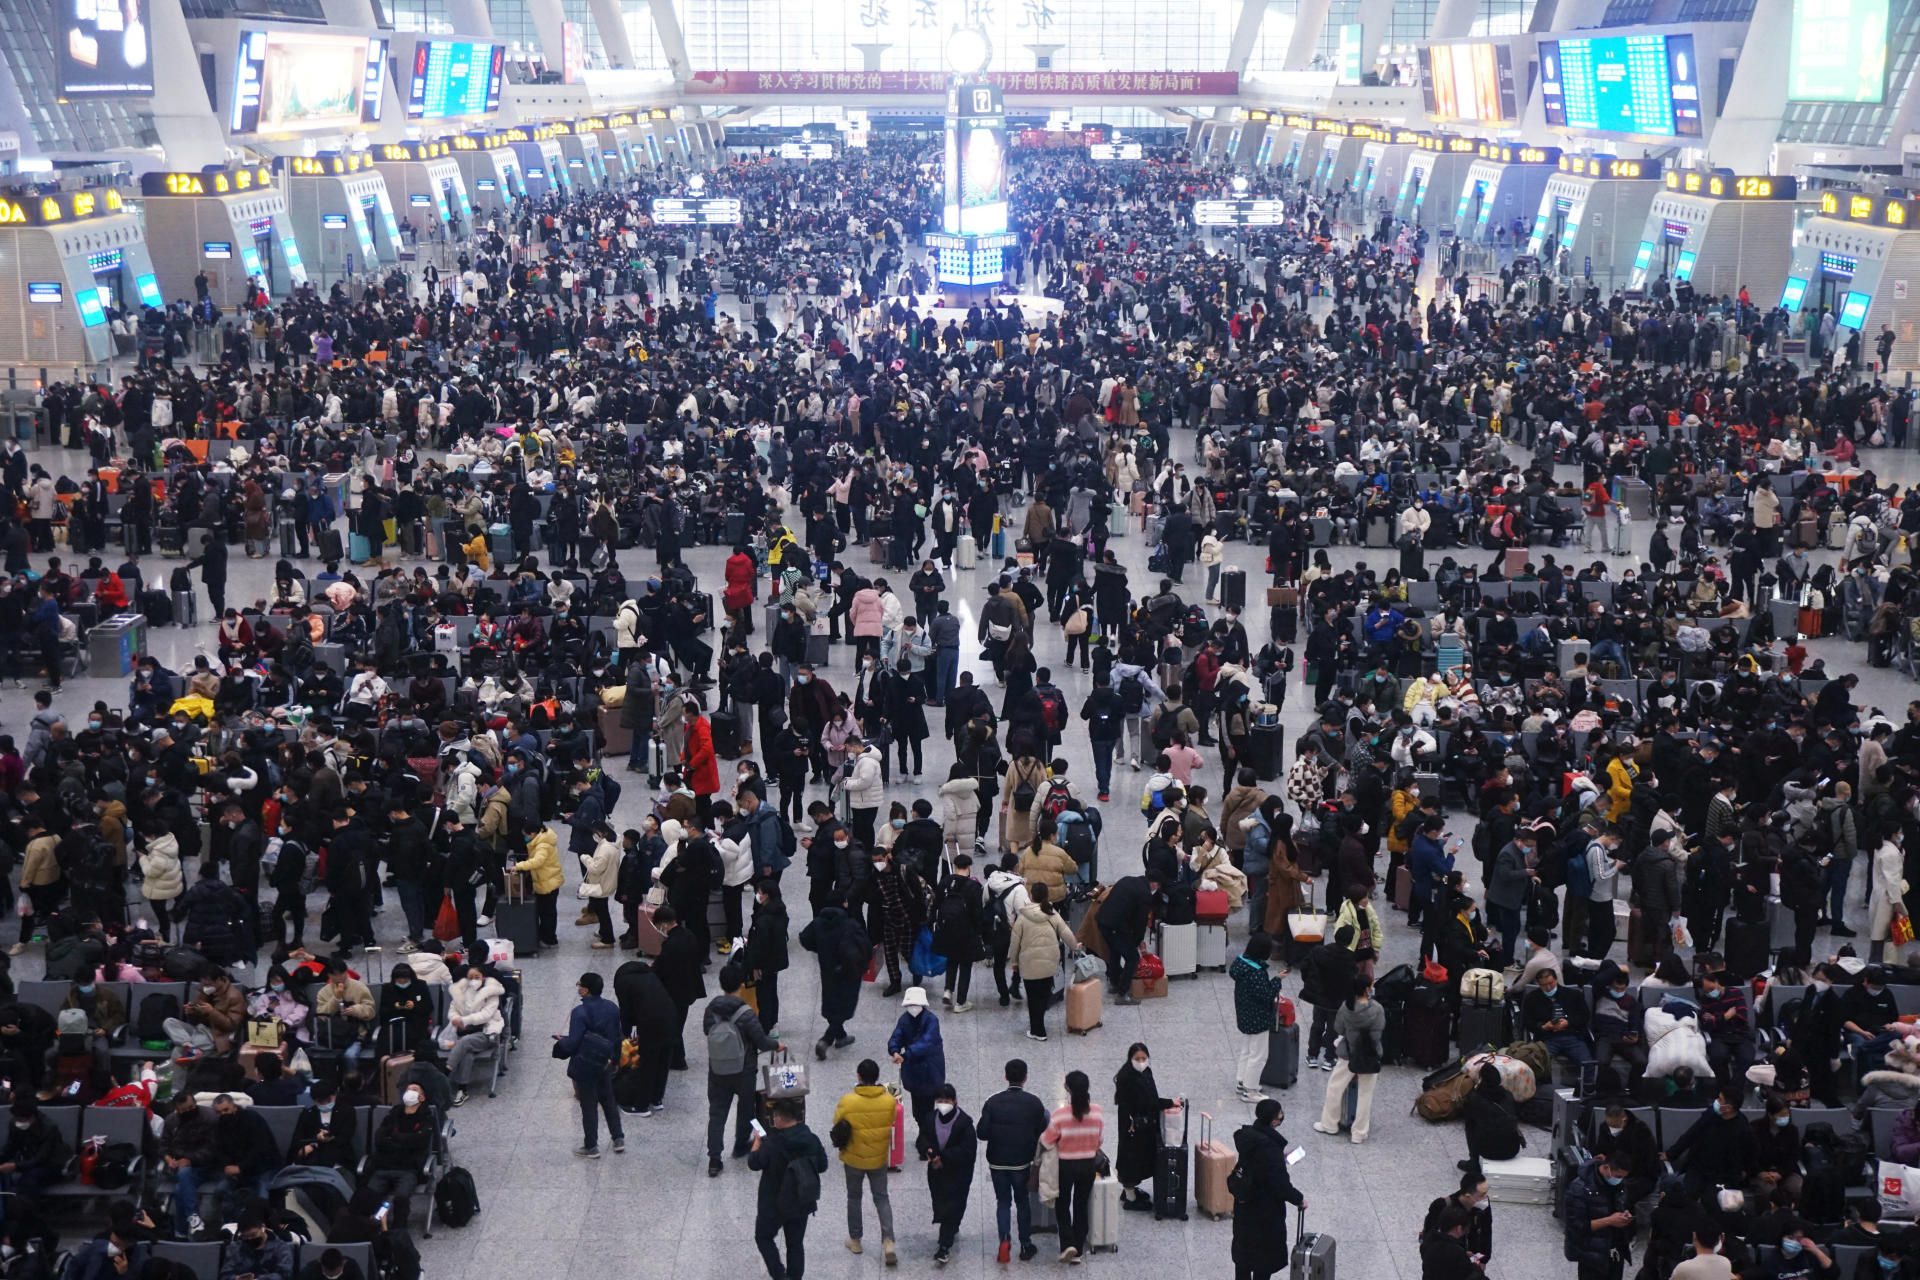 Inside the railway station in Hangzhou, Zhejiang province, China, January 20, 2023.